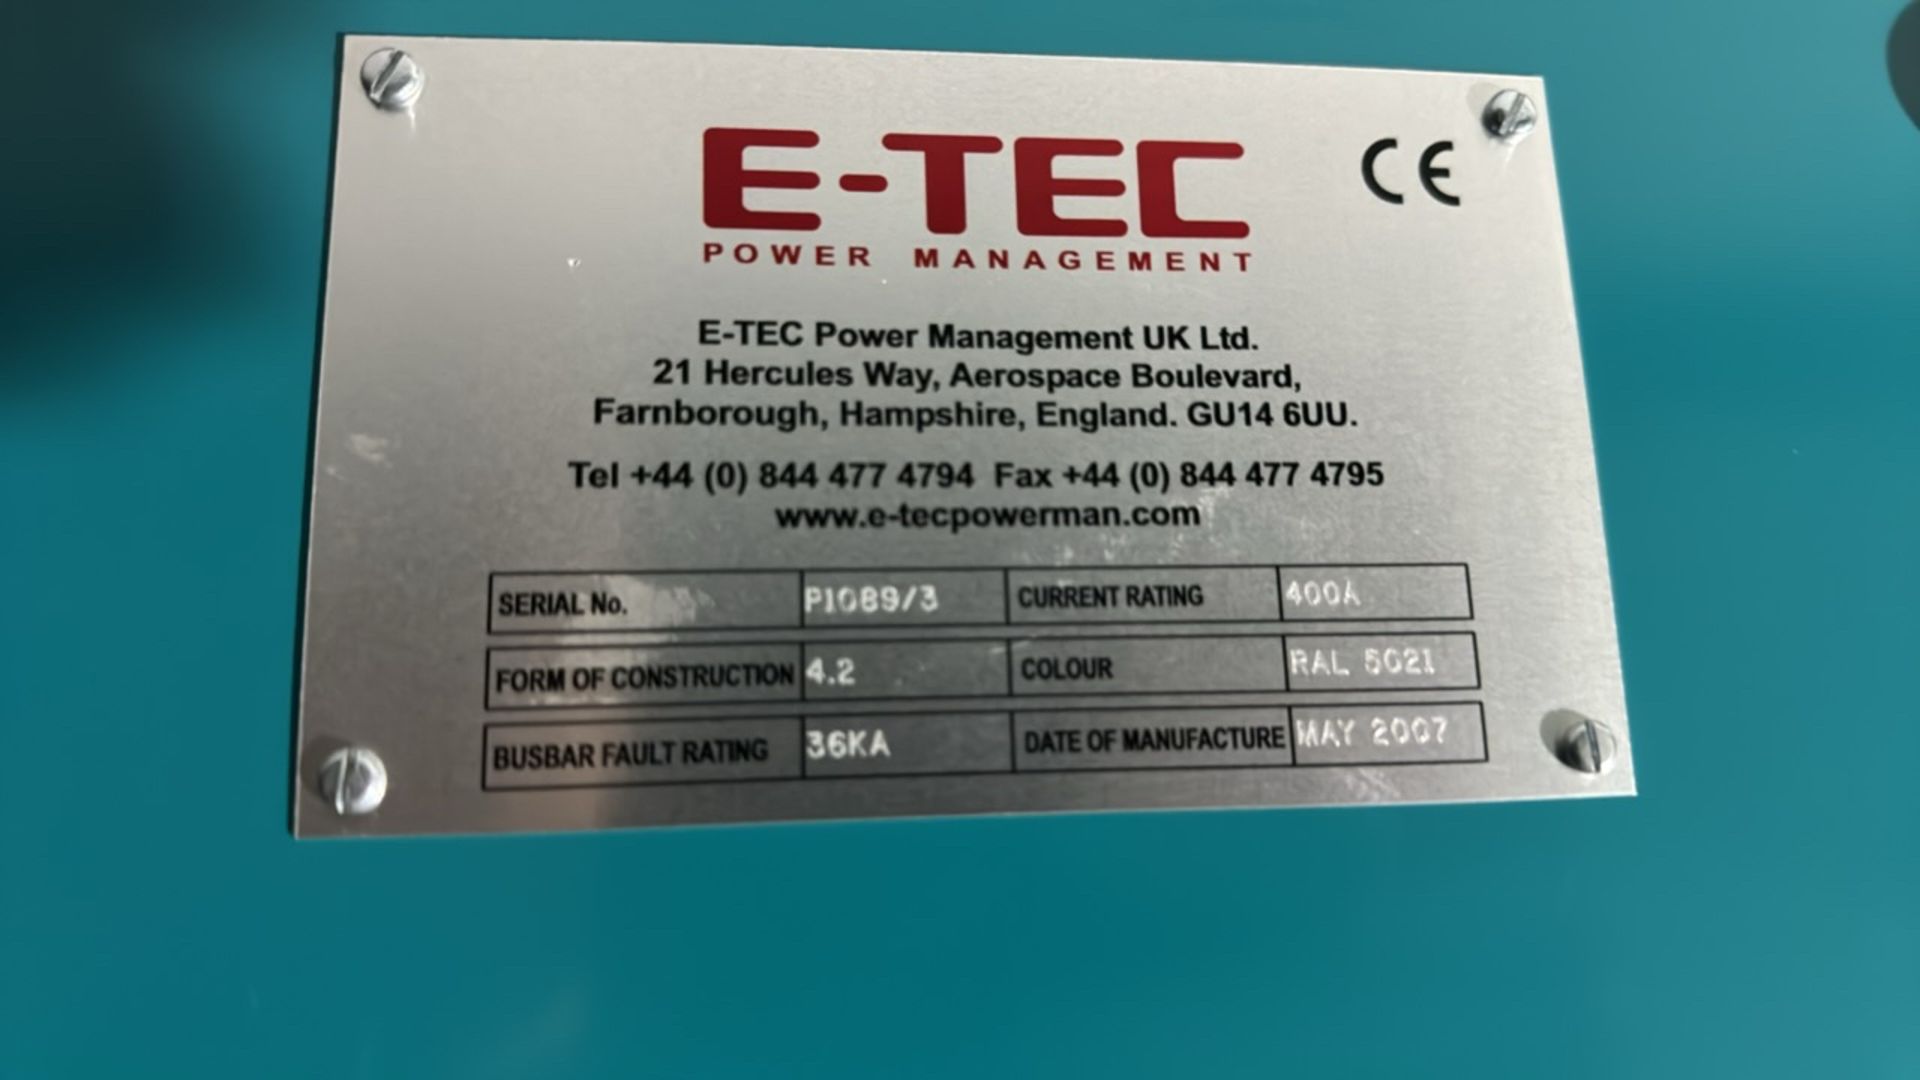 E-TEC Power Manager - Image 6 of 7